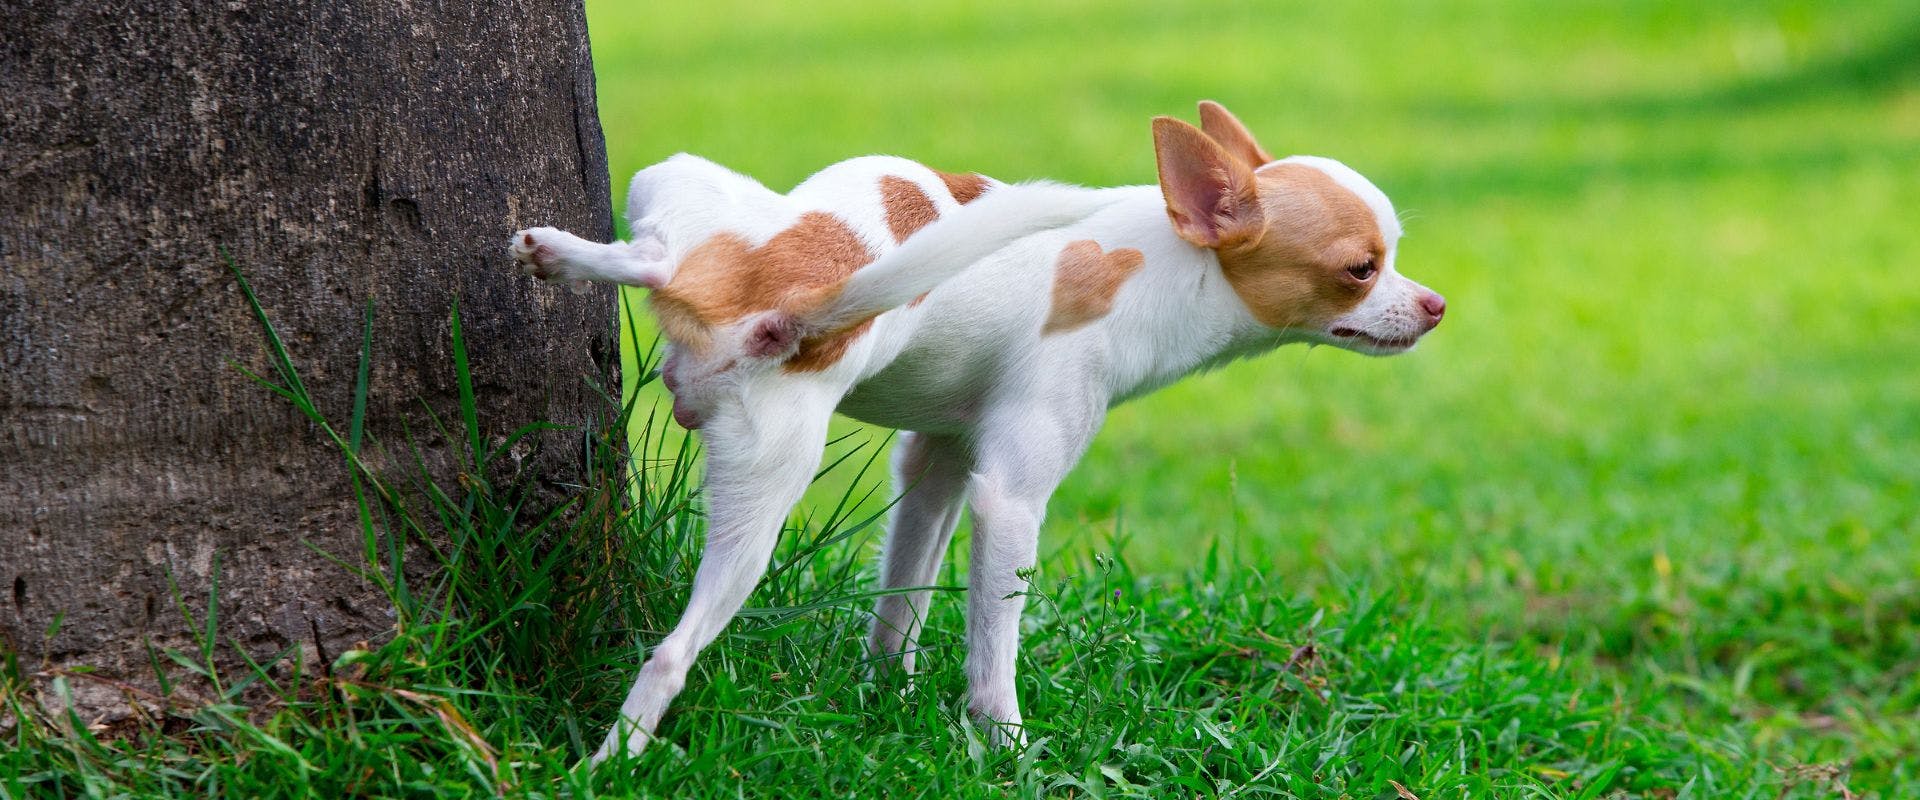 Chihuahua dog peeing up a tree